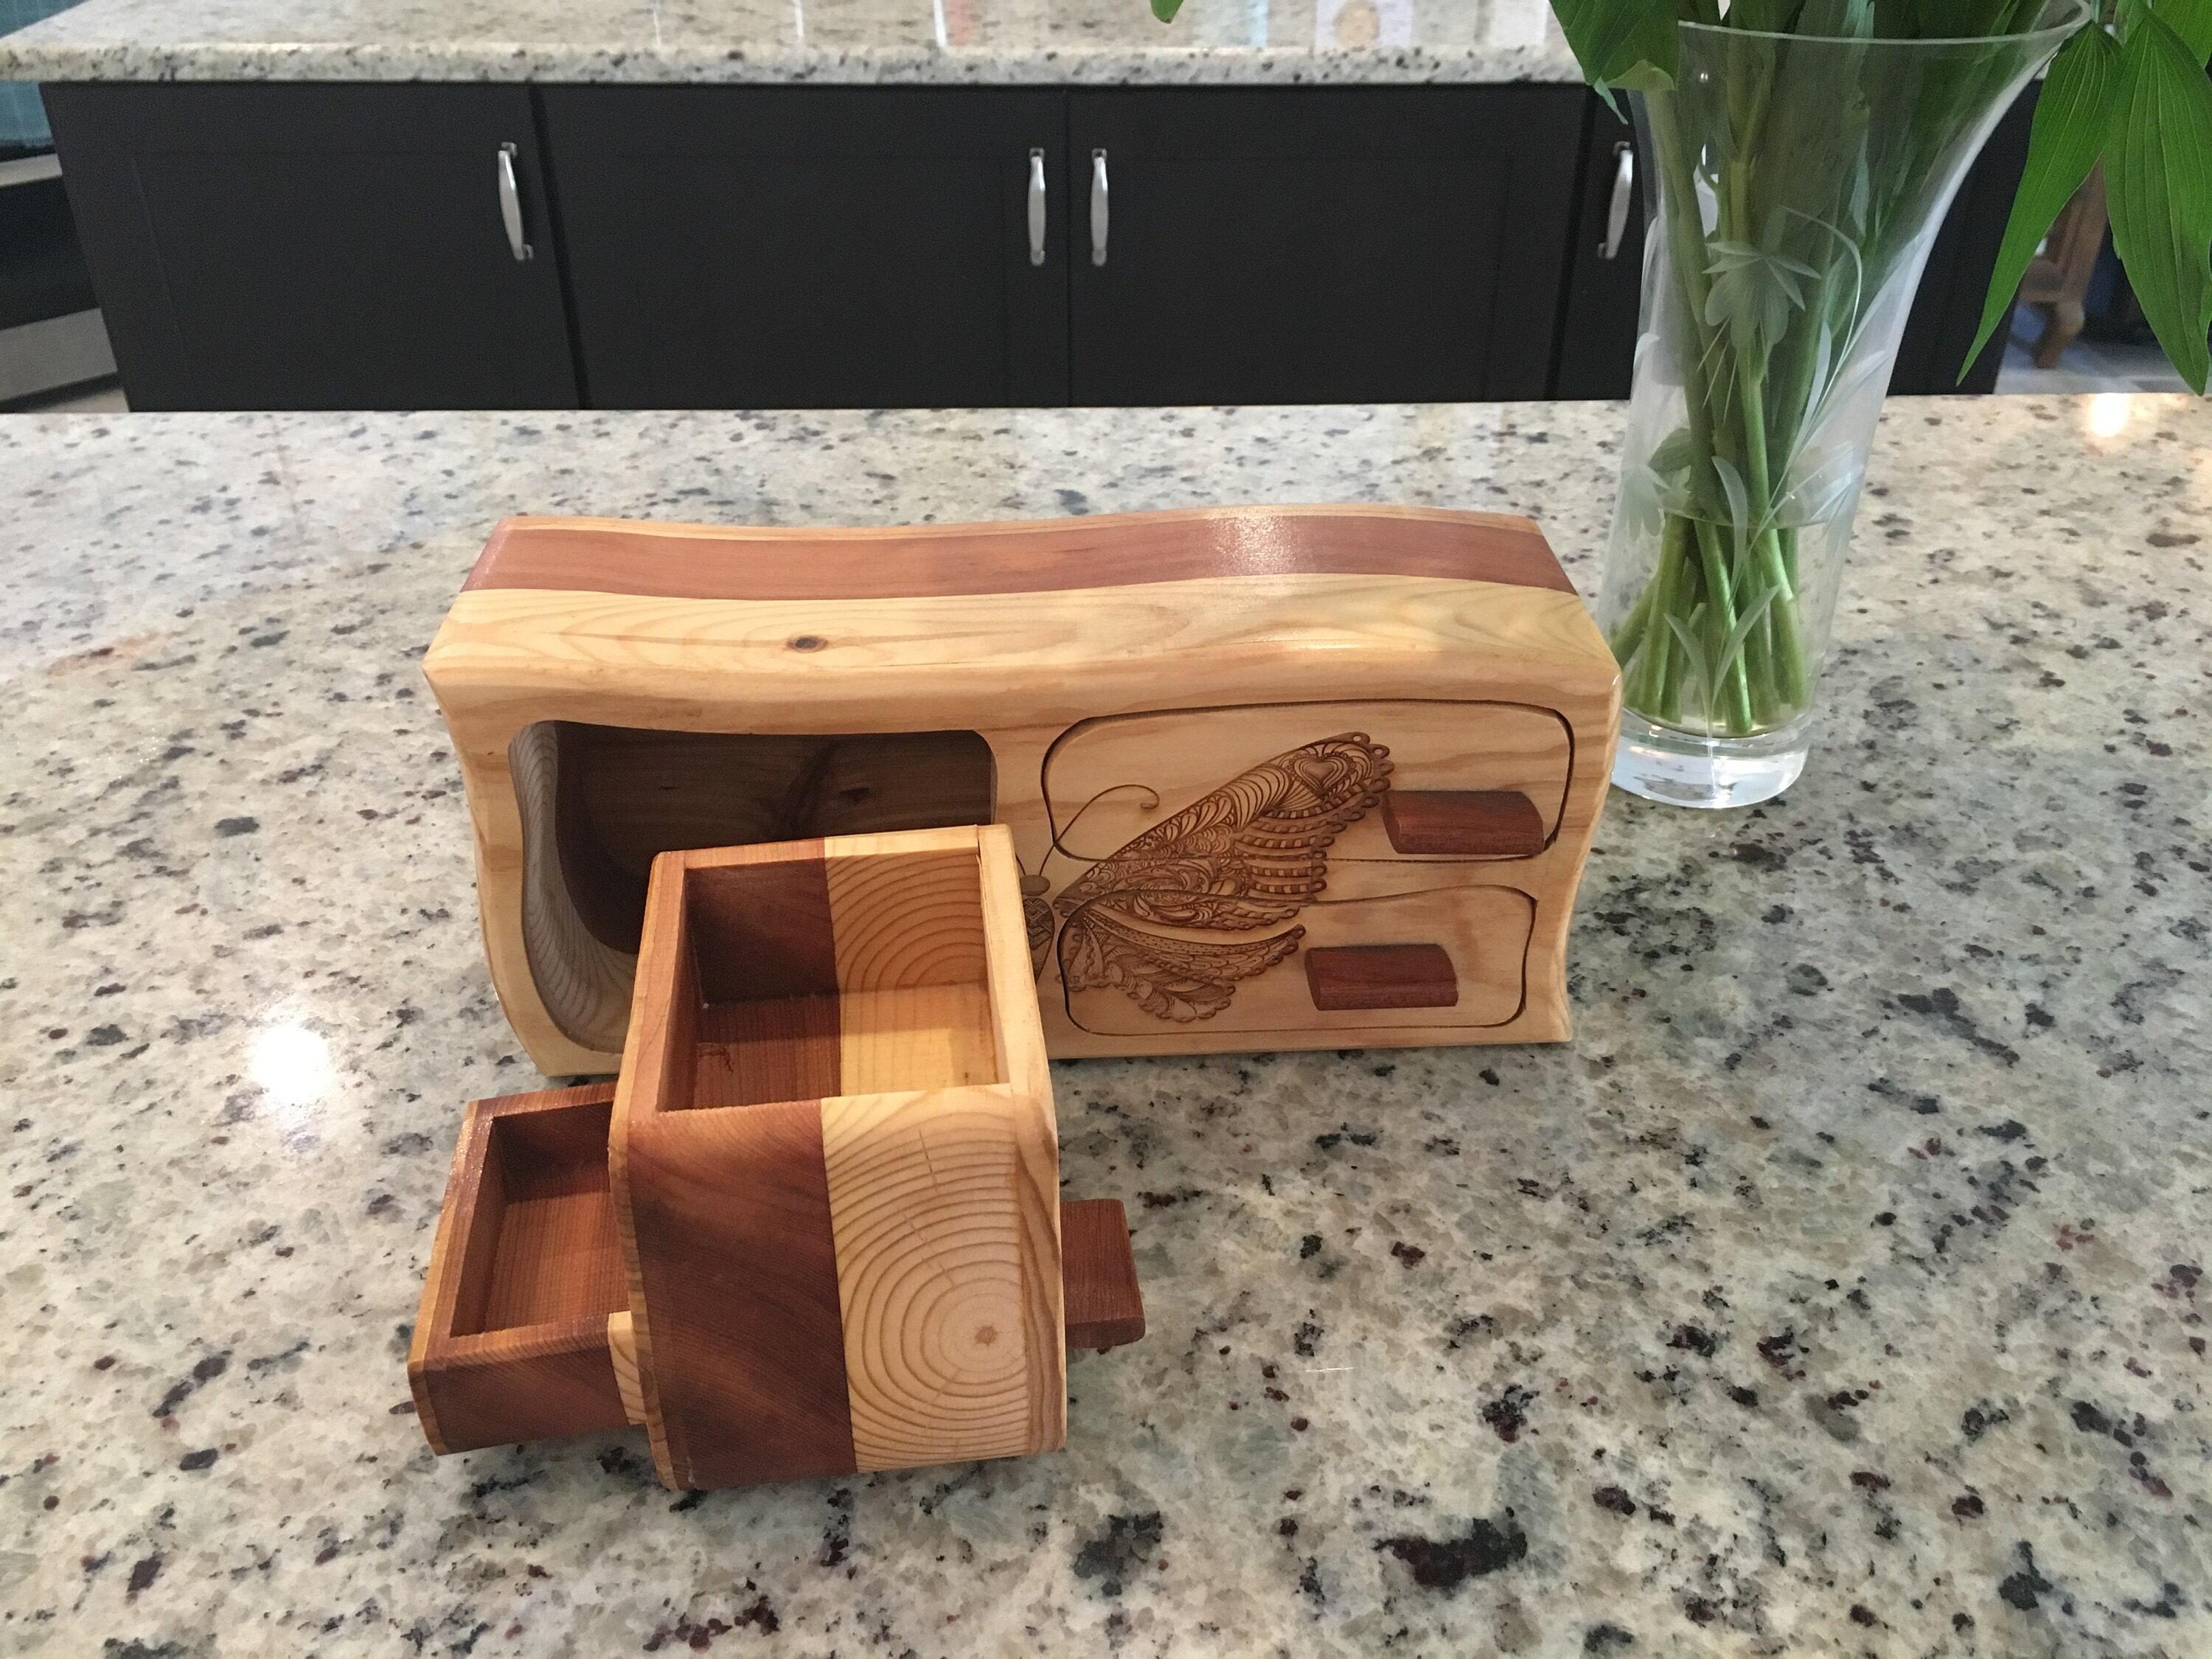 Decorative Solid Wood Box